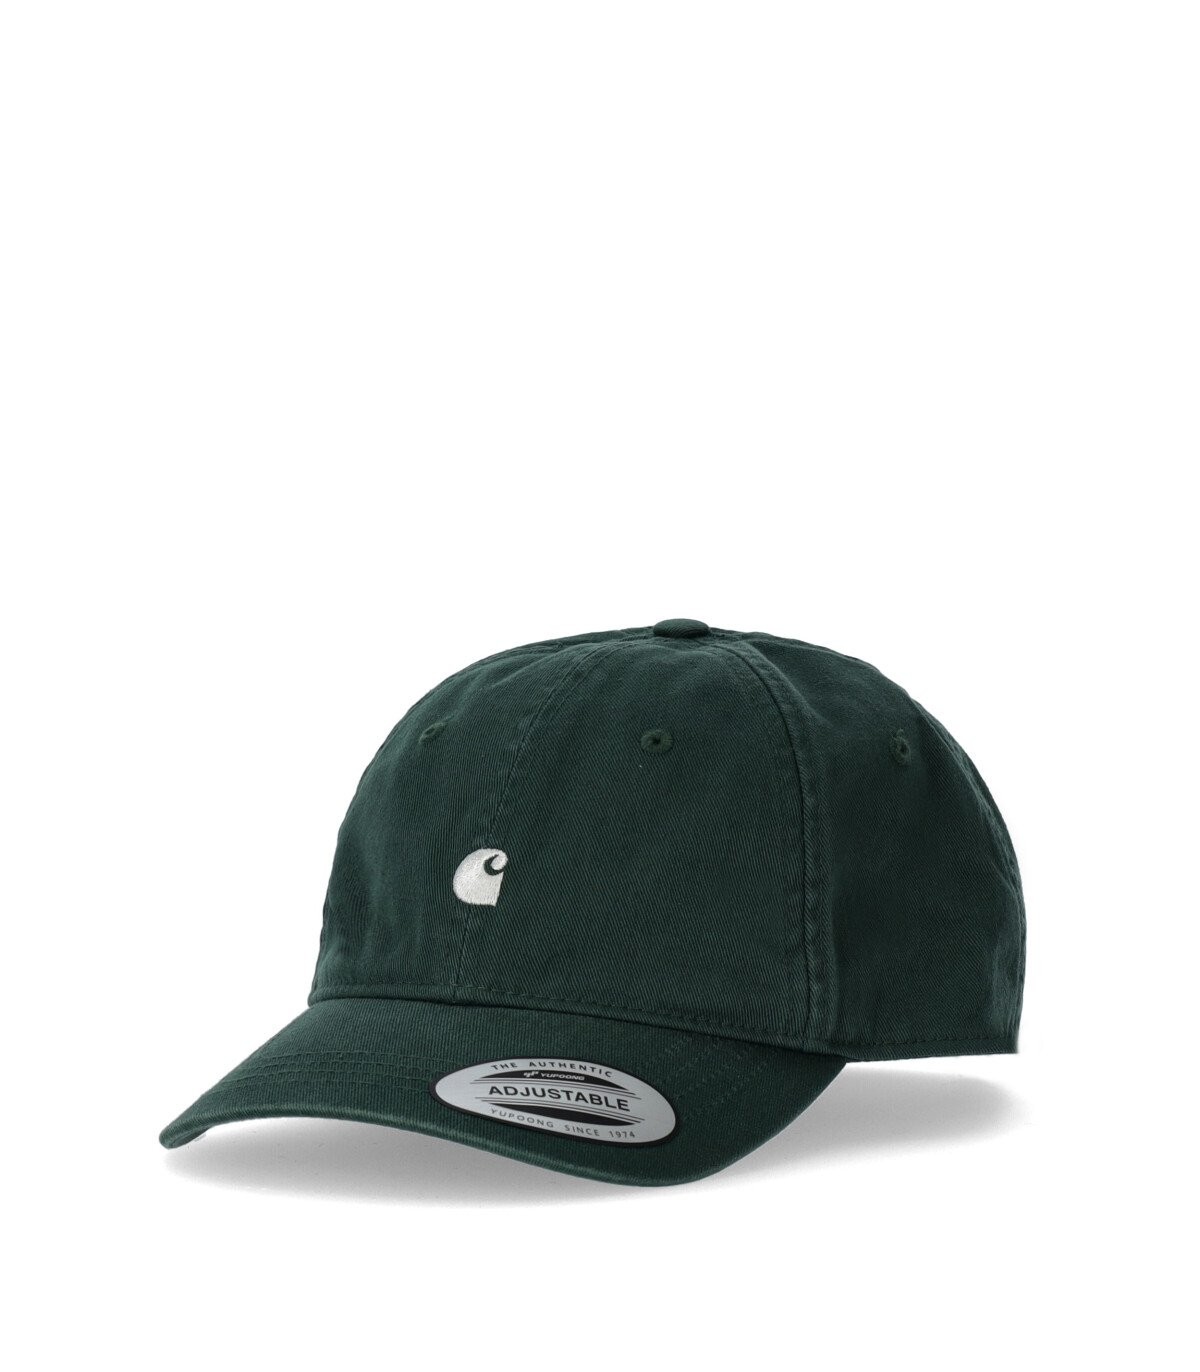 CARHARTT WIP MADISON LOGO GREEN CAP